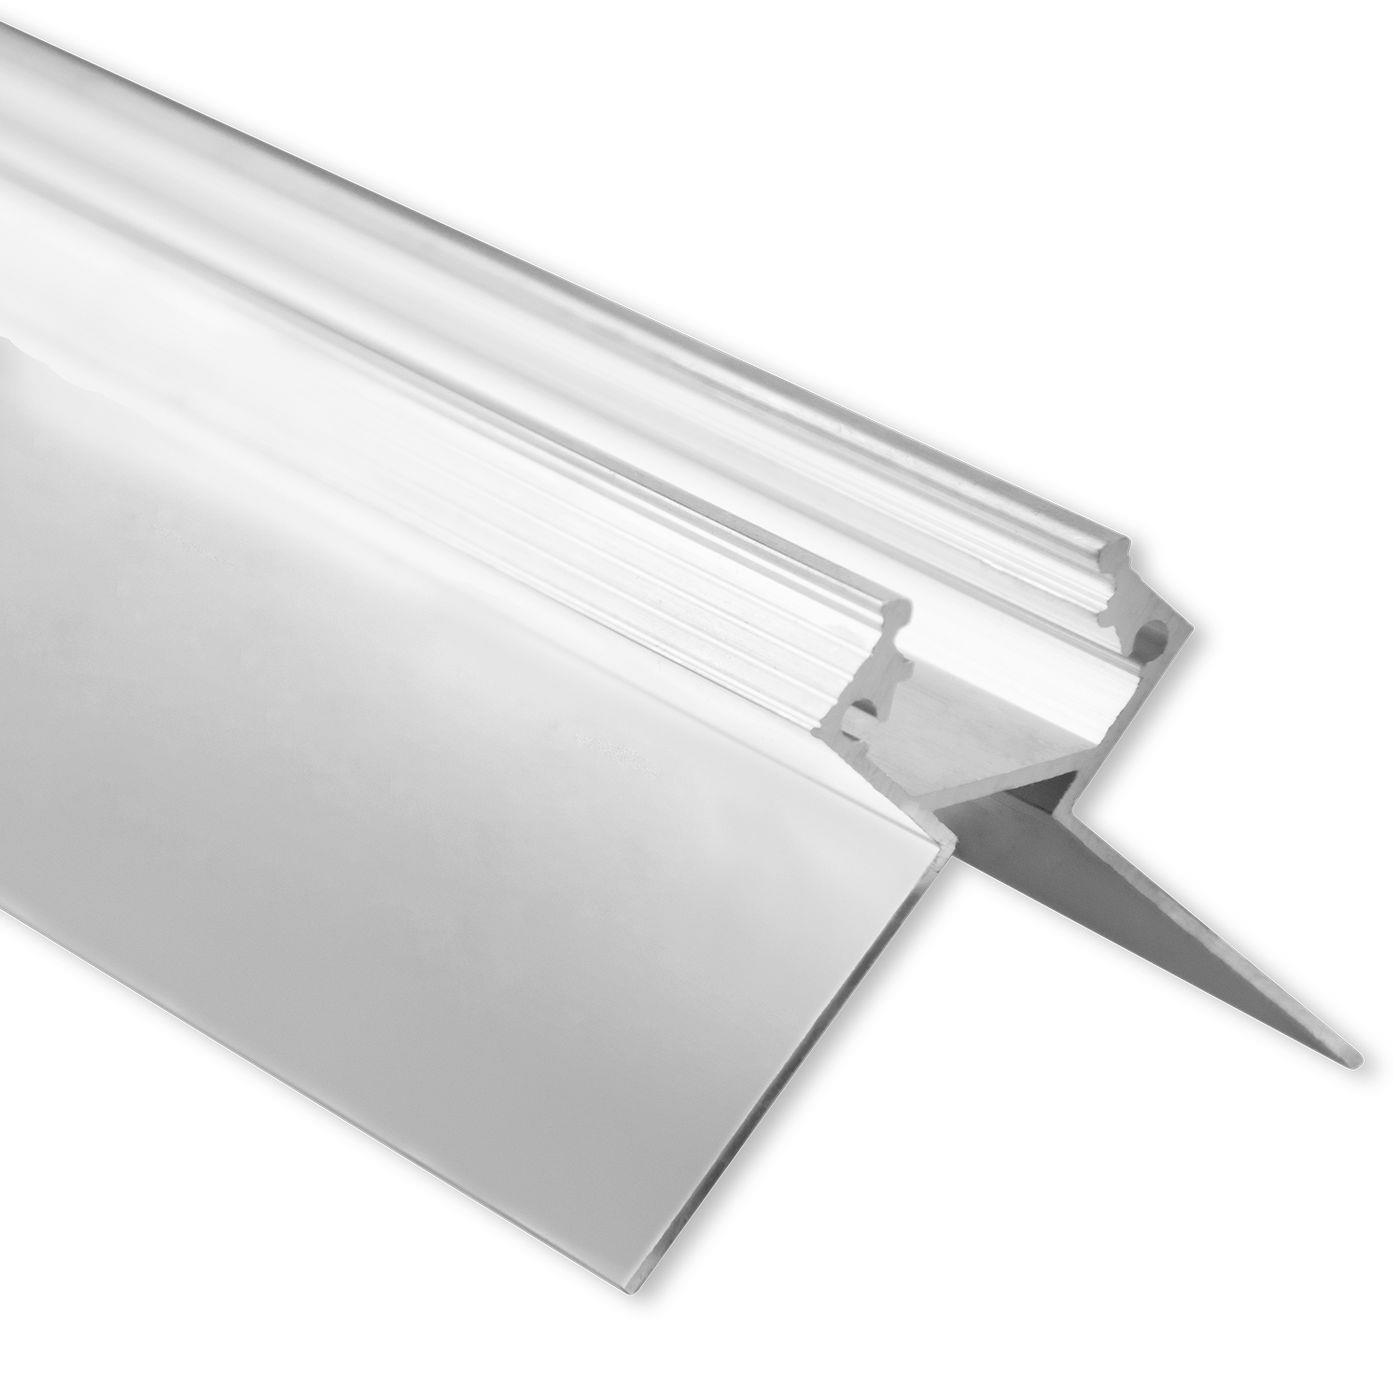 2m LED Profil TBP7 Silber 37,9x37,9mm Aluminium Trockenbauprofil für 12mm LED Streifen